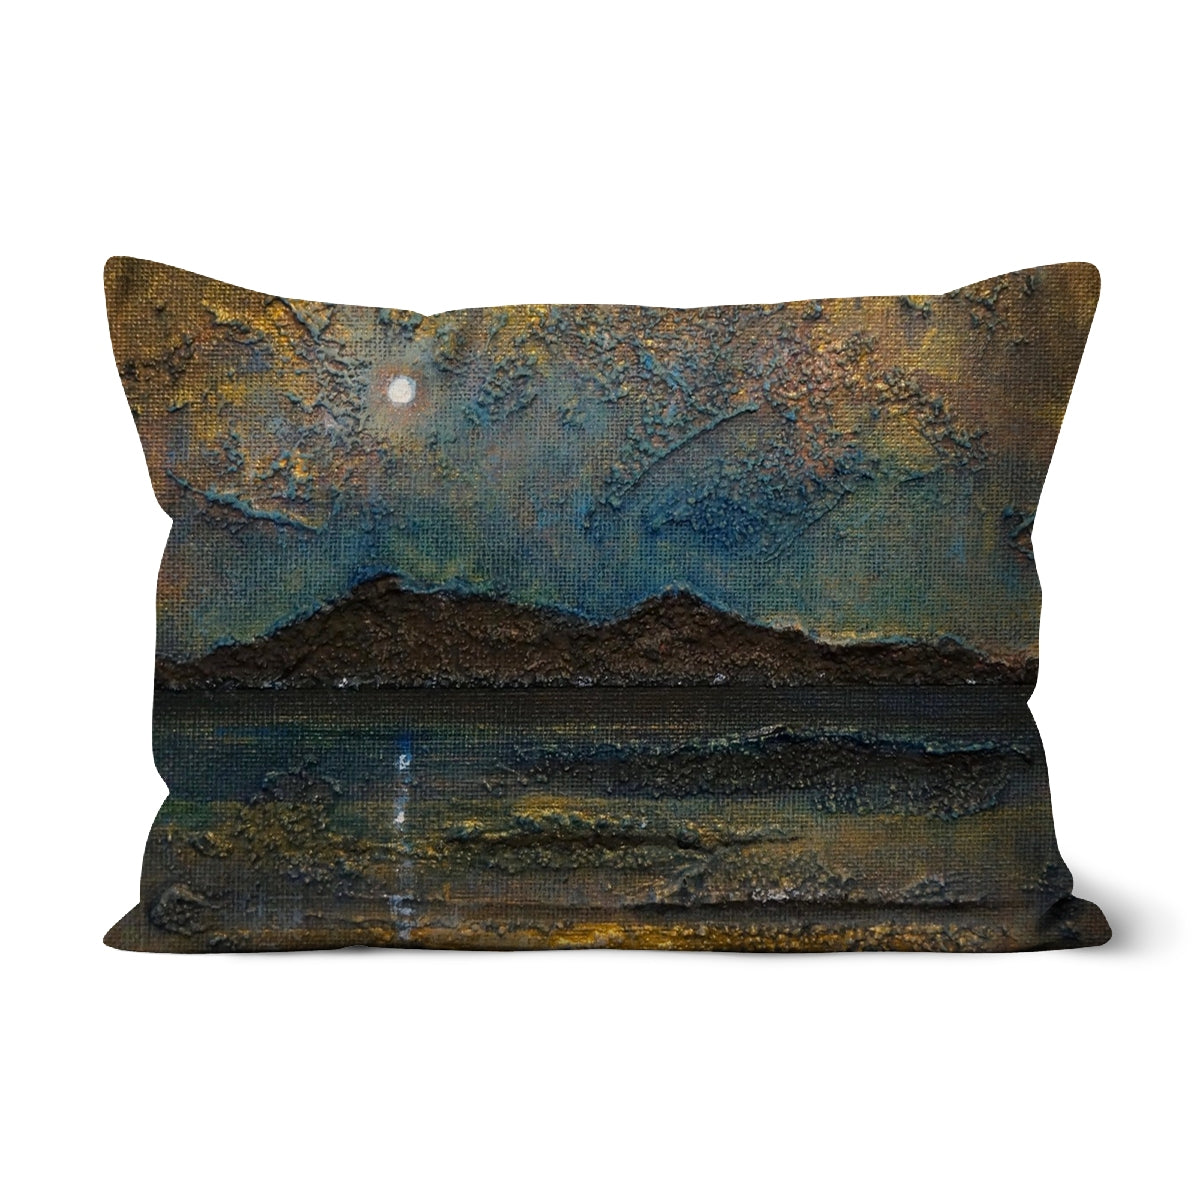 Arran Moonlight Art Gifts Cushion-Cushions-Arran Art Gallery-Canvas-19"x13"-Paintings, Prints, Homeware, Art Gifts From Scotland By Scottish Artist Kevin Hunter